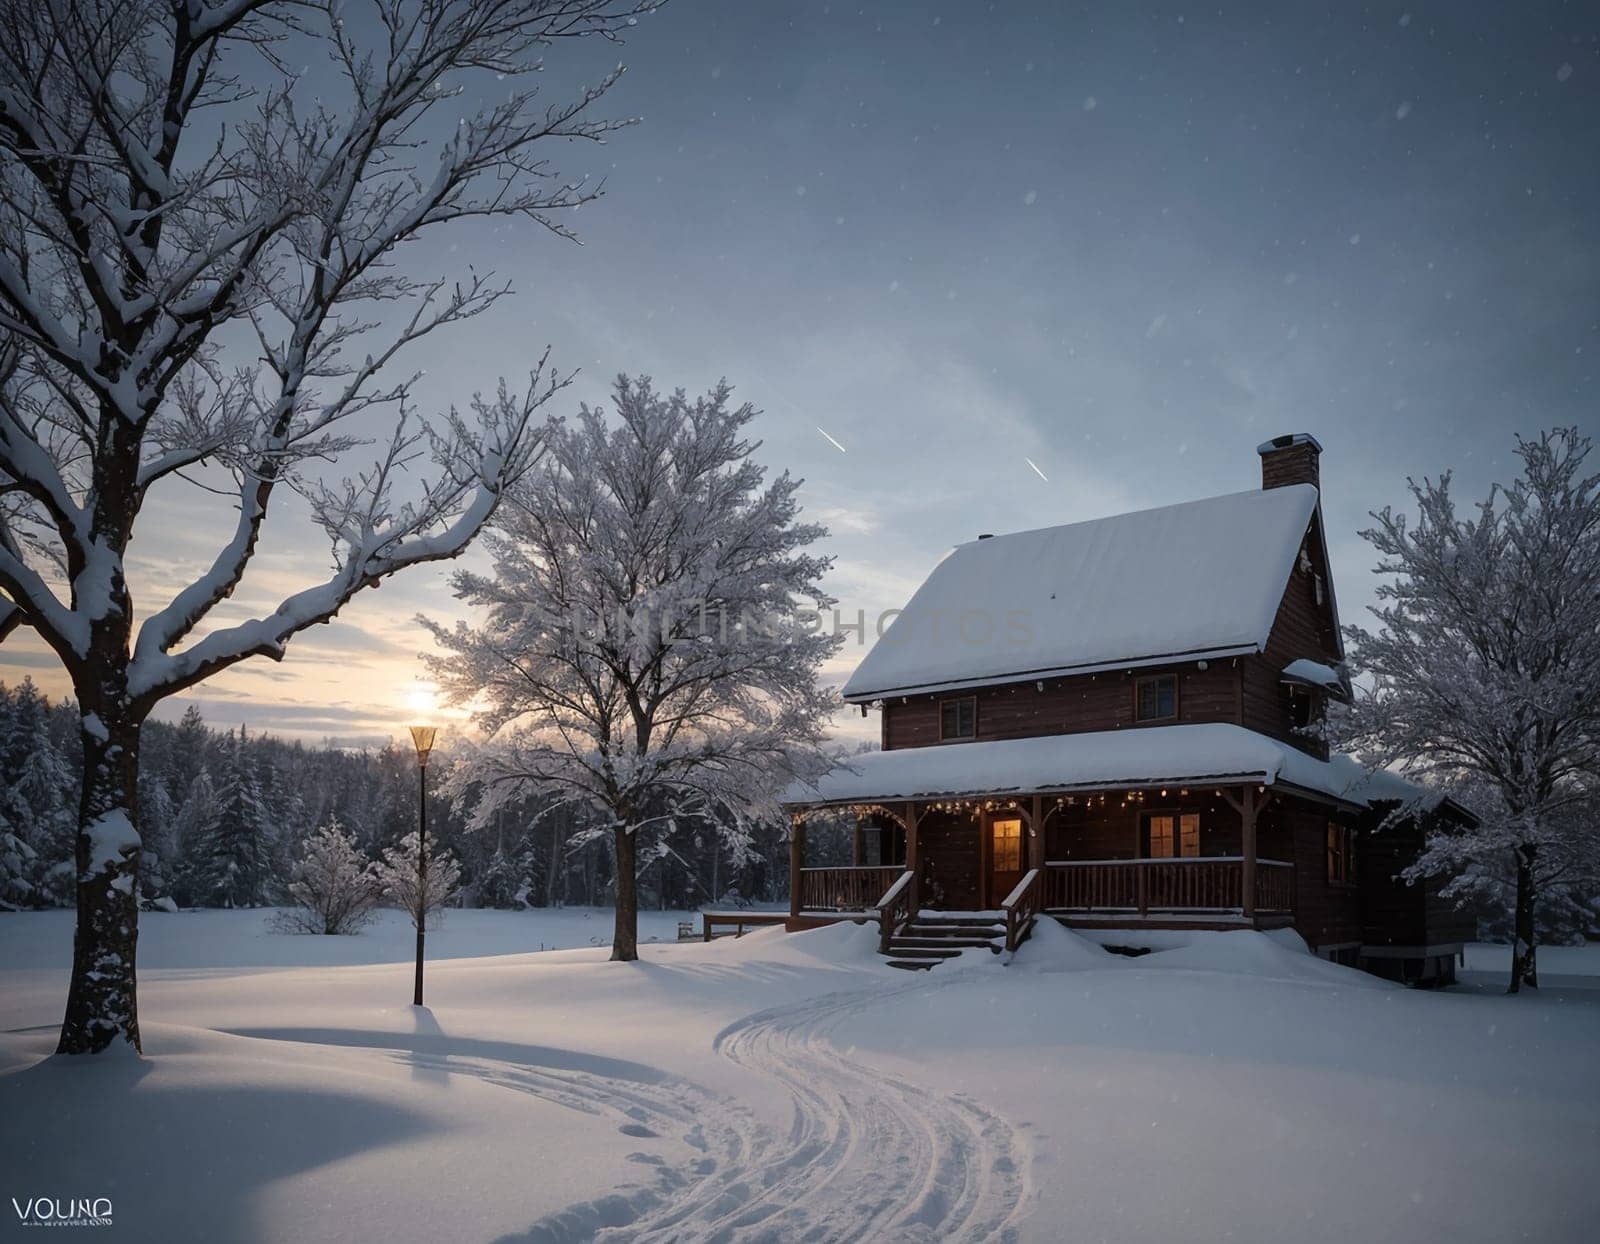 Beautiful winter landscape. High quality illustration